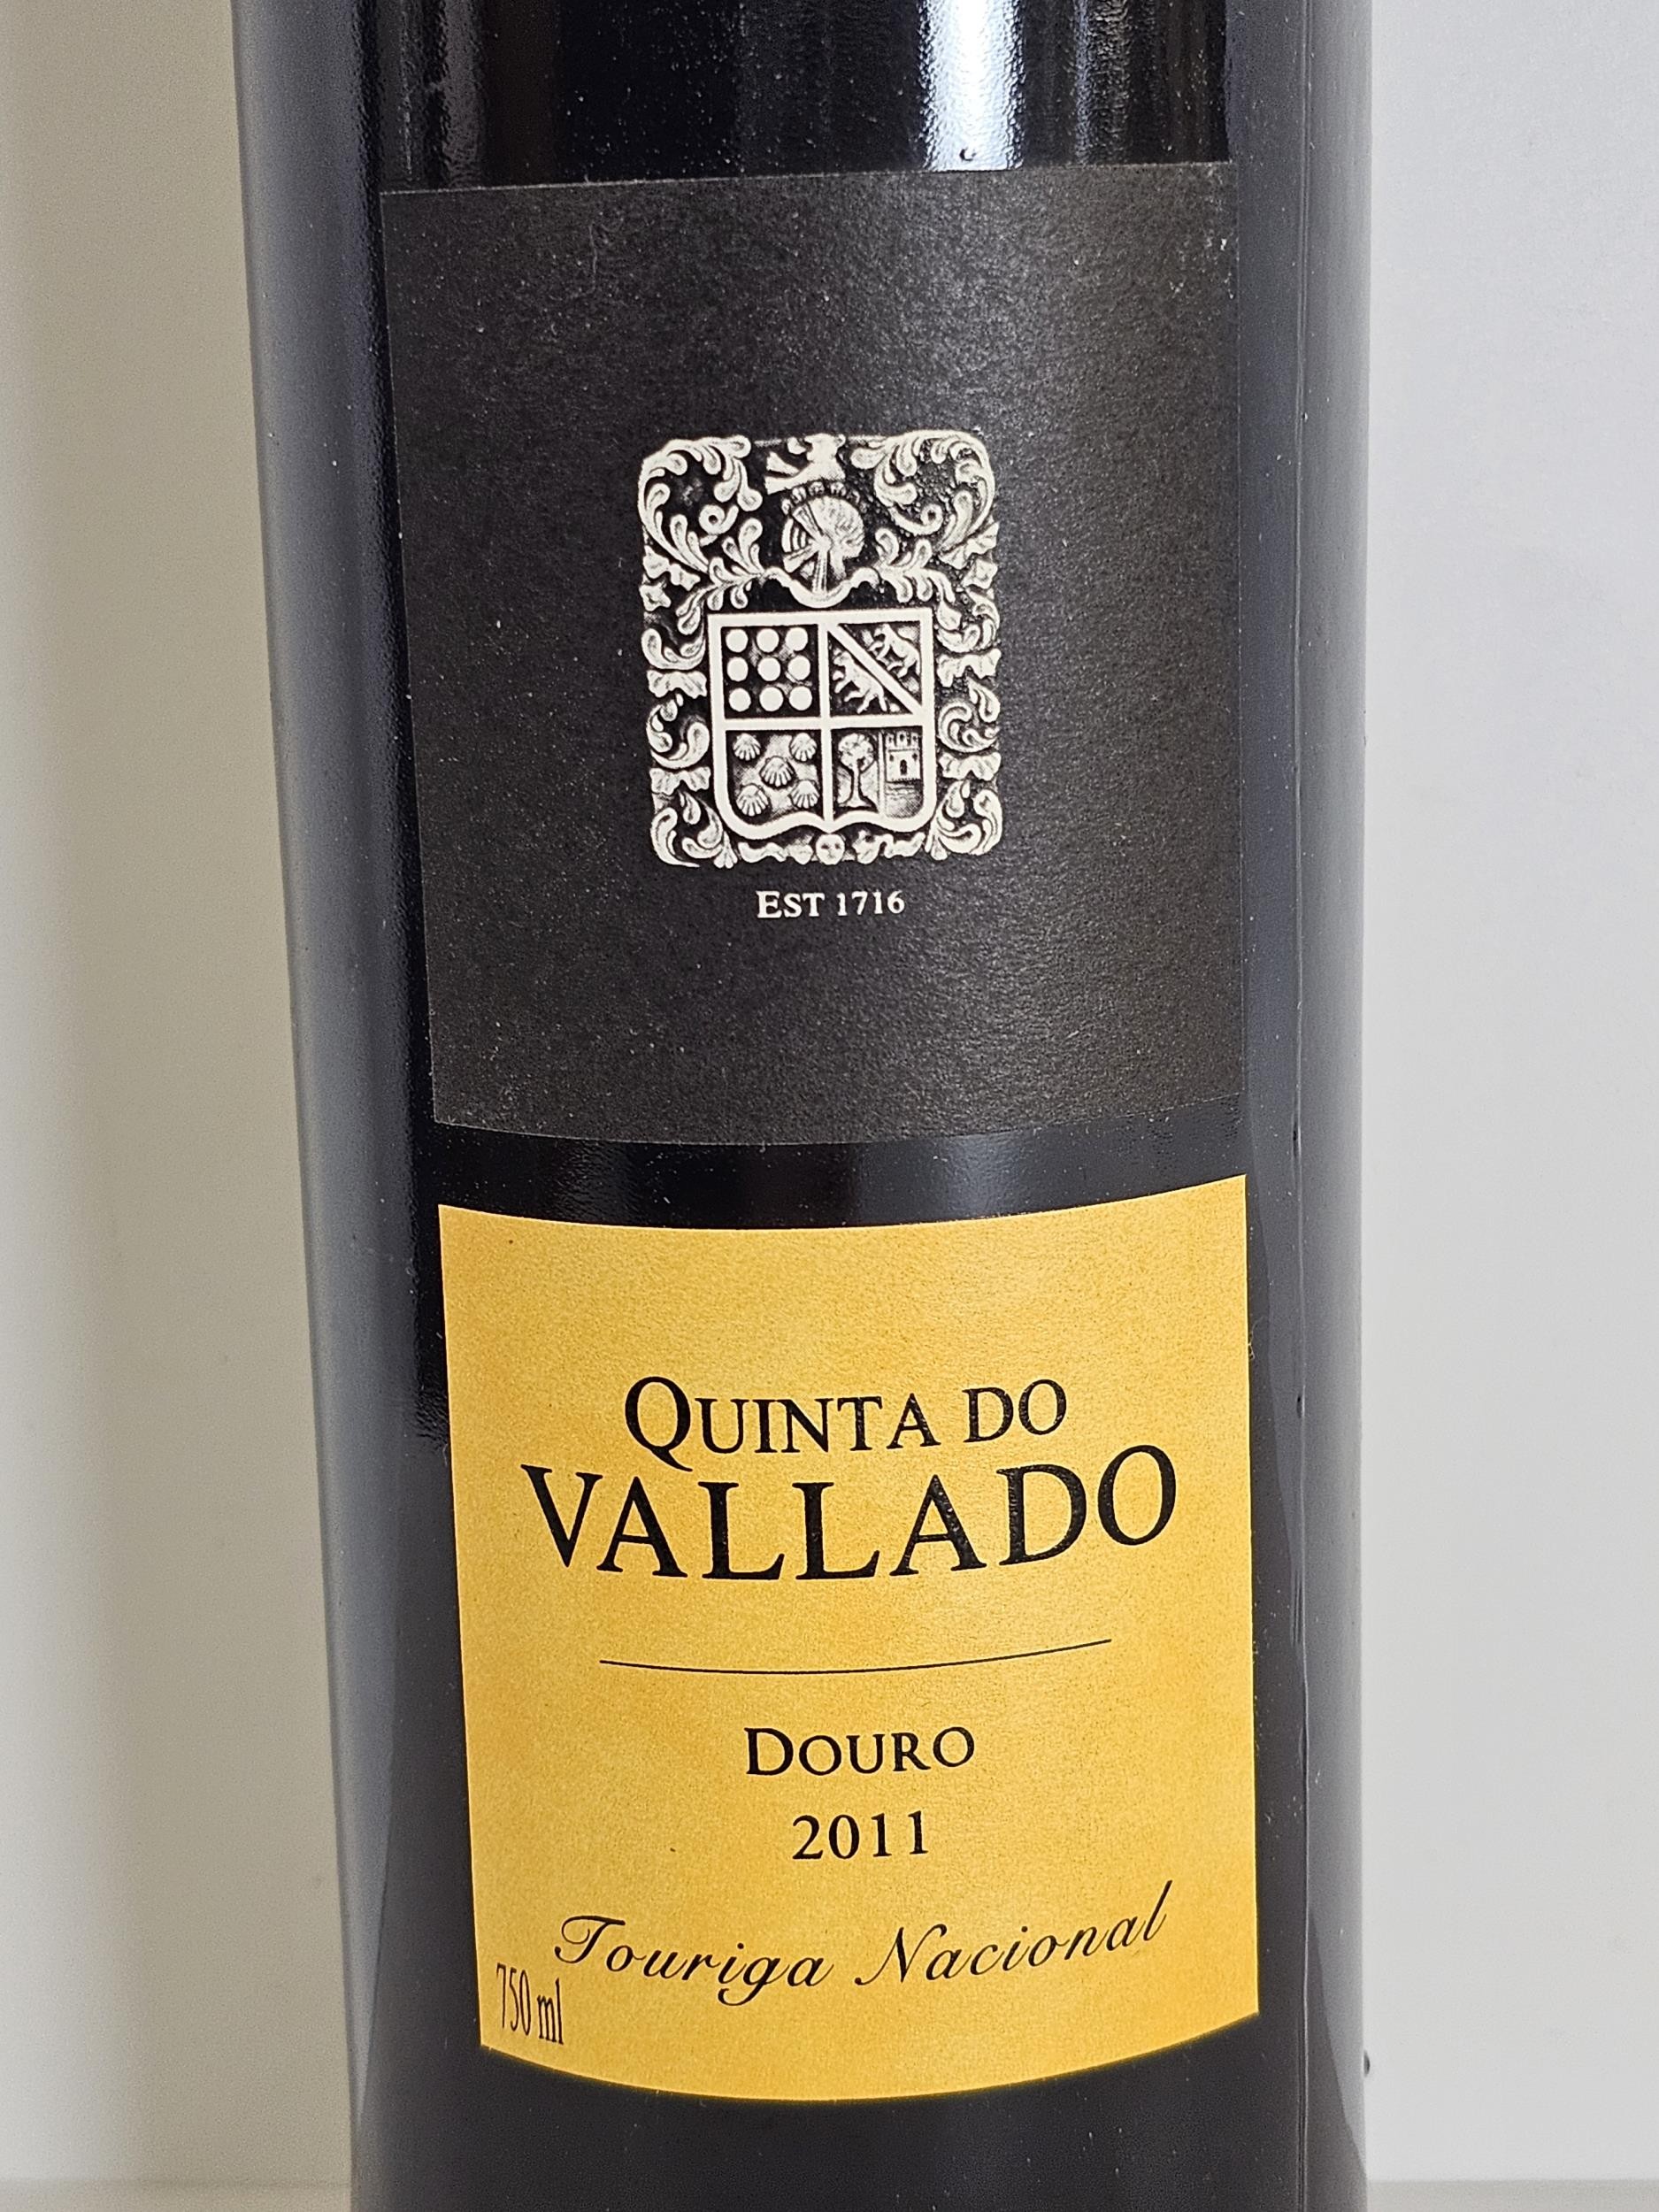 2011 Quinta do Vallado Touriga Nacional Douro, Portugal. 75cl - Image 4 of 4